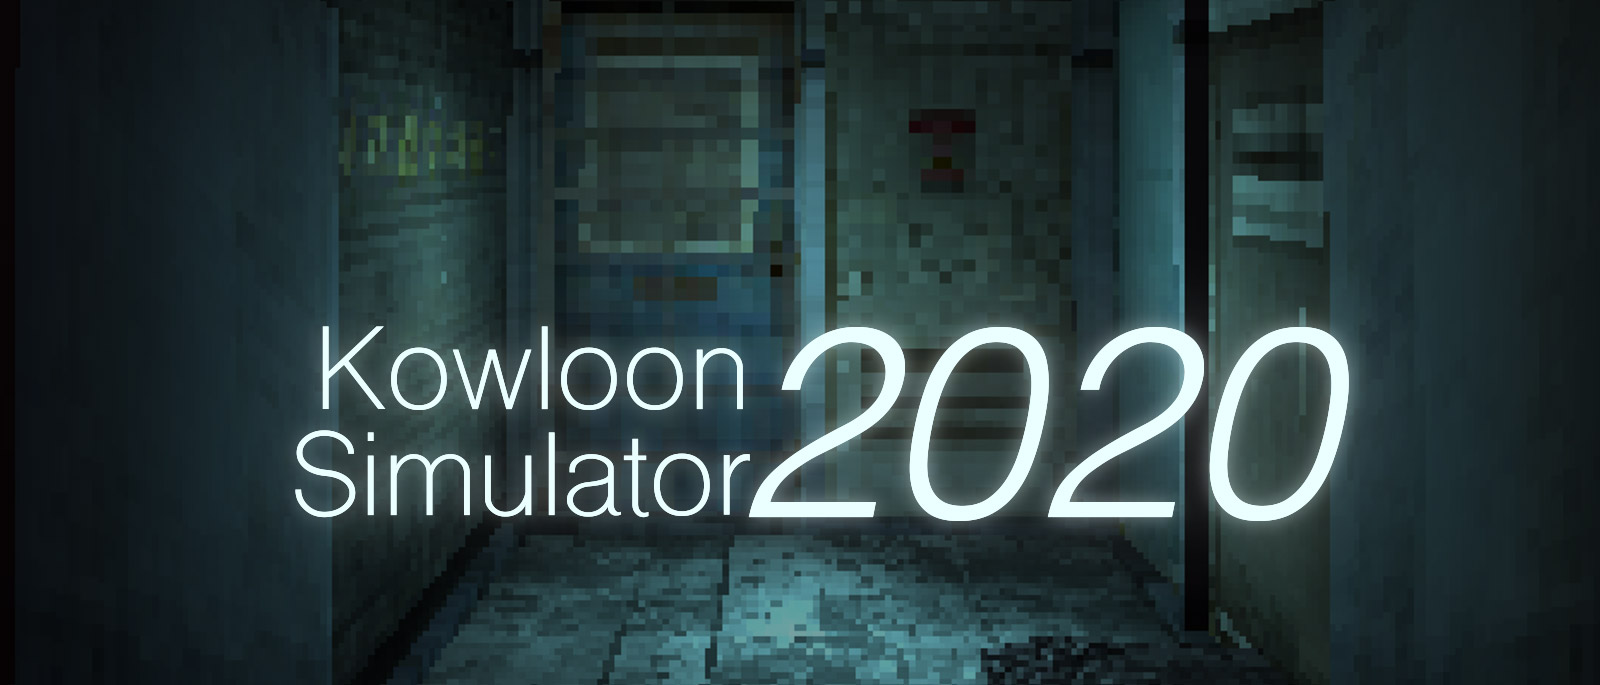 Kowloon Sumulator 2020